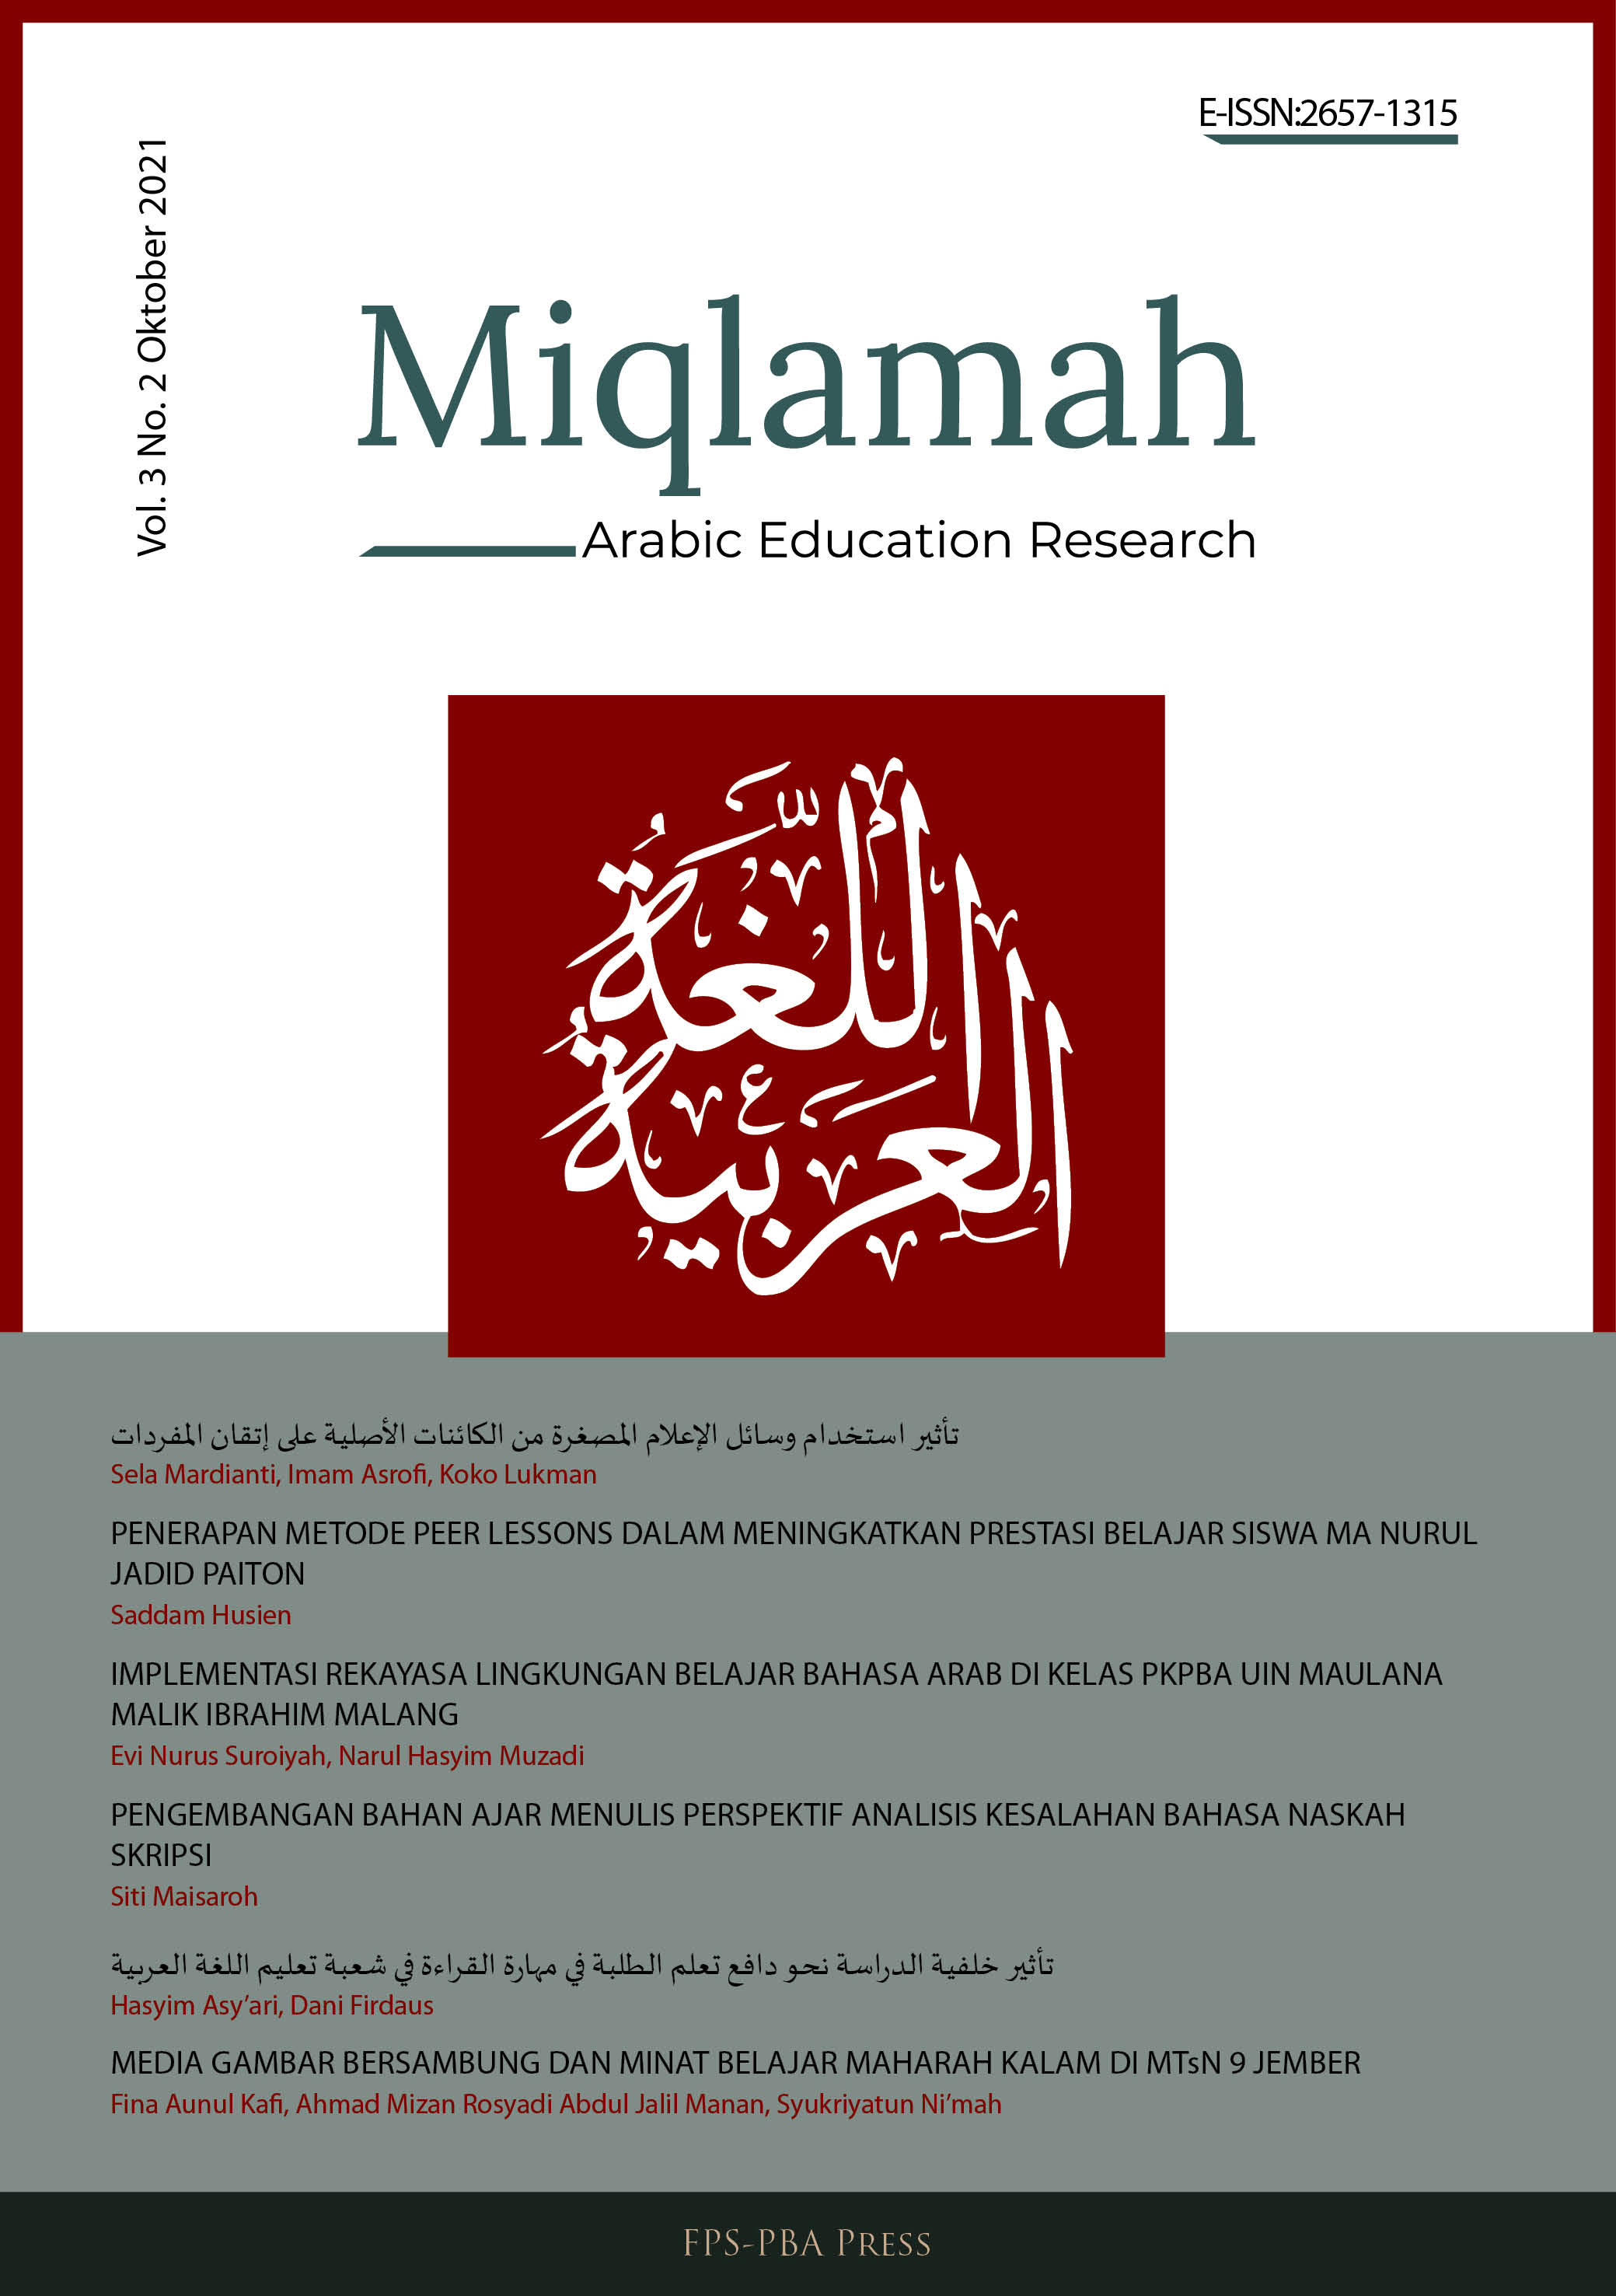 his journal is published by FPS-PBA (Forum Program Studi-Pendidikan Bahasa Arab) Kopertais Wilayah IV